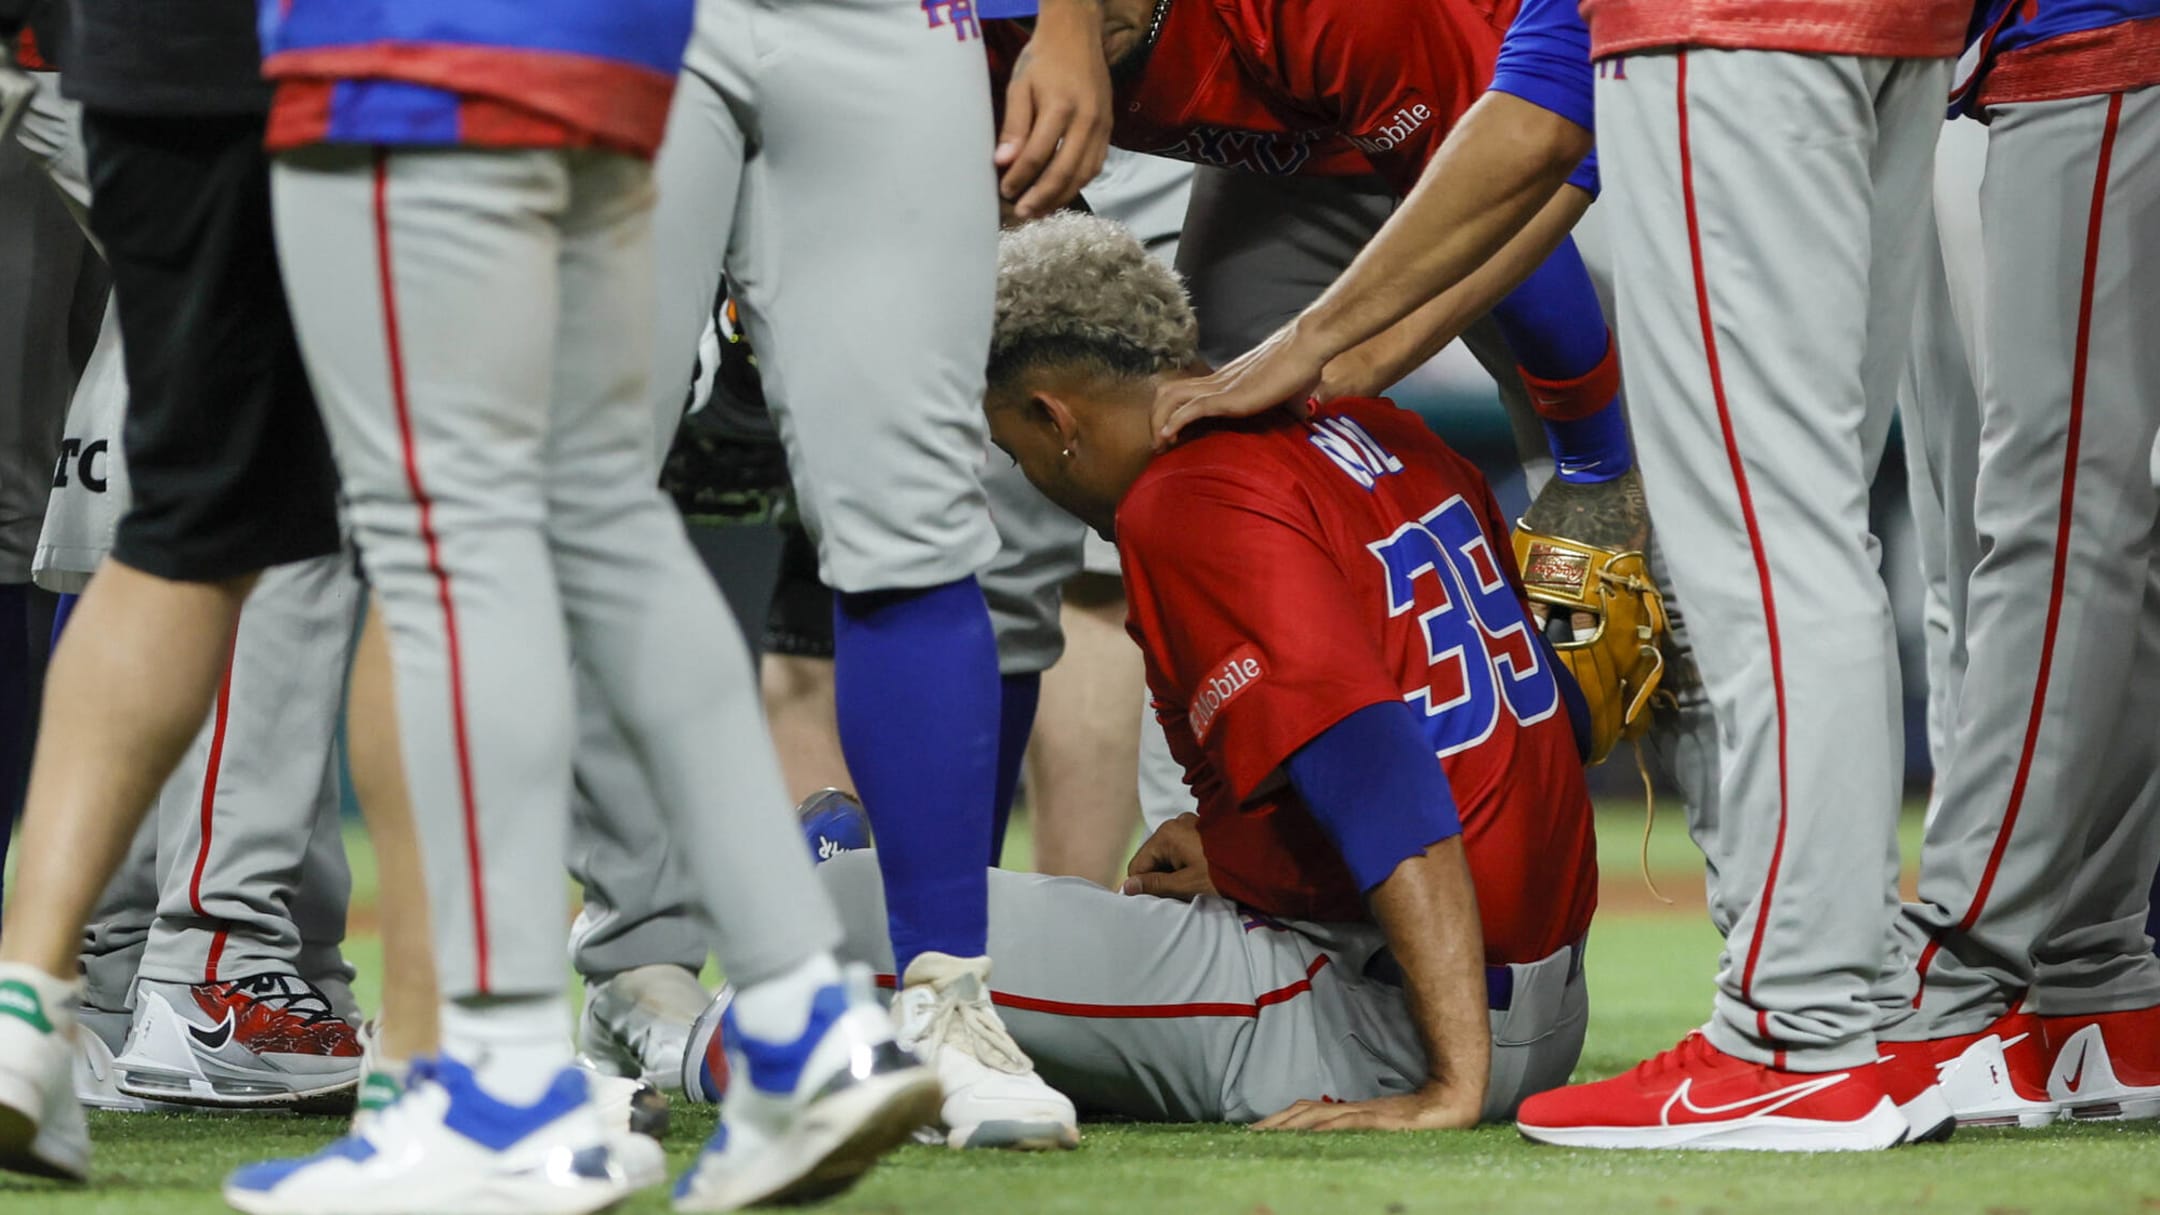 Mets closer Edwin Diaz injured while celebrating World Baseball